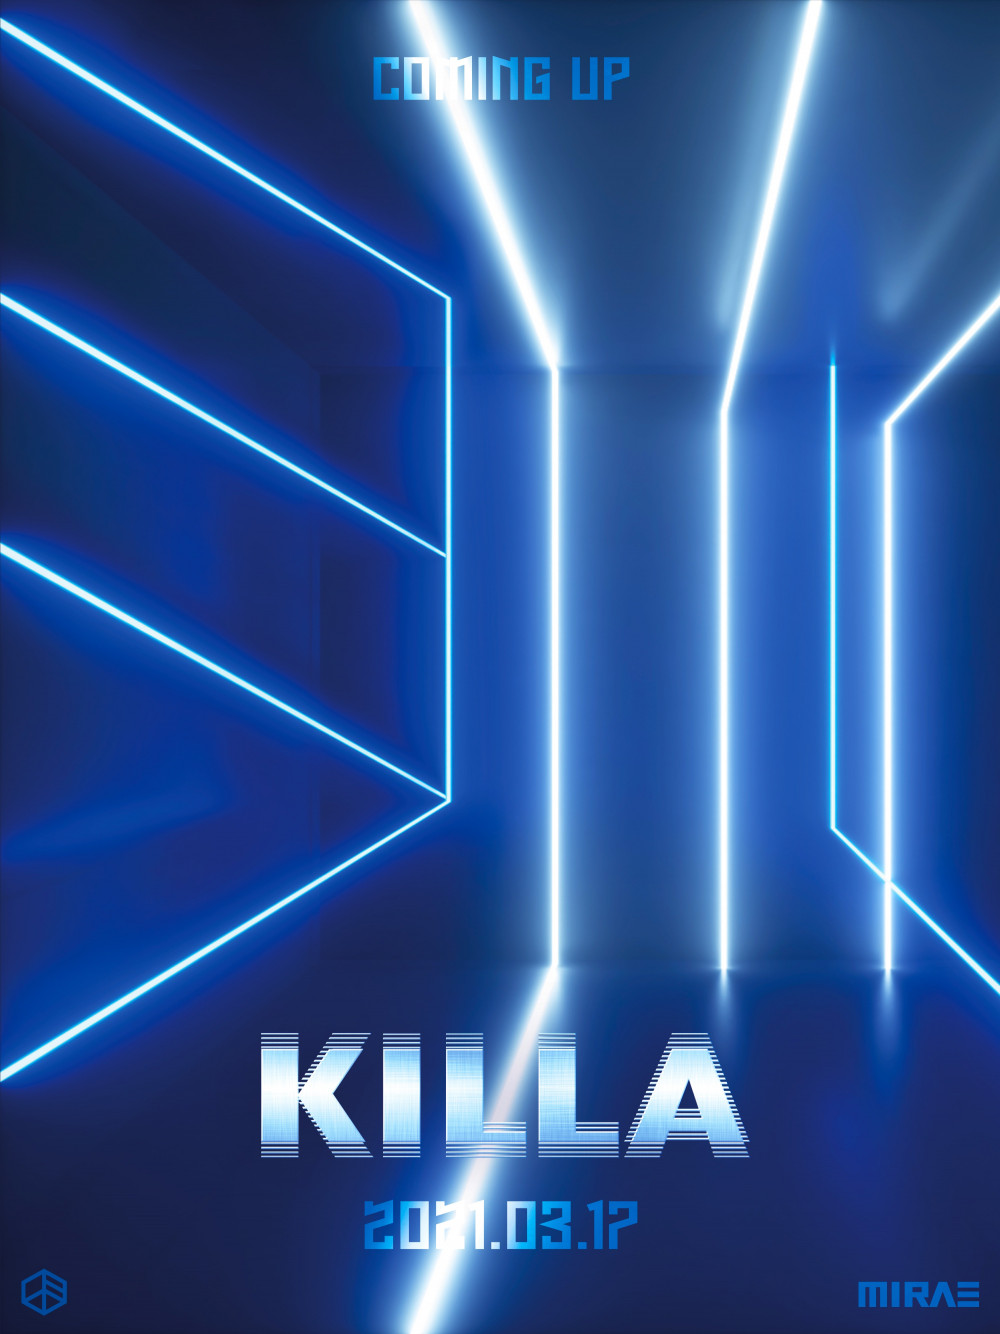 [Дебют] MIRAE альбом "KILLA": музыкальный клип "KILLA"